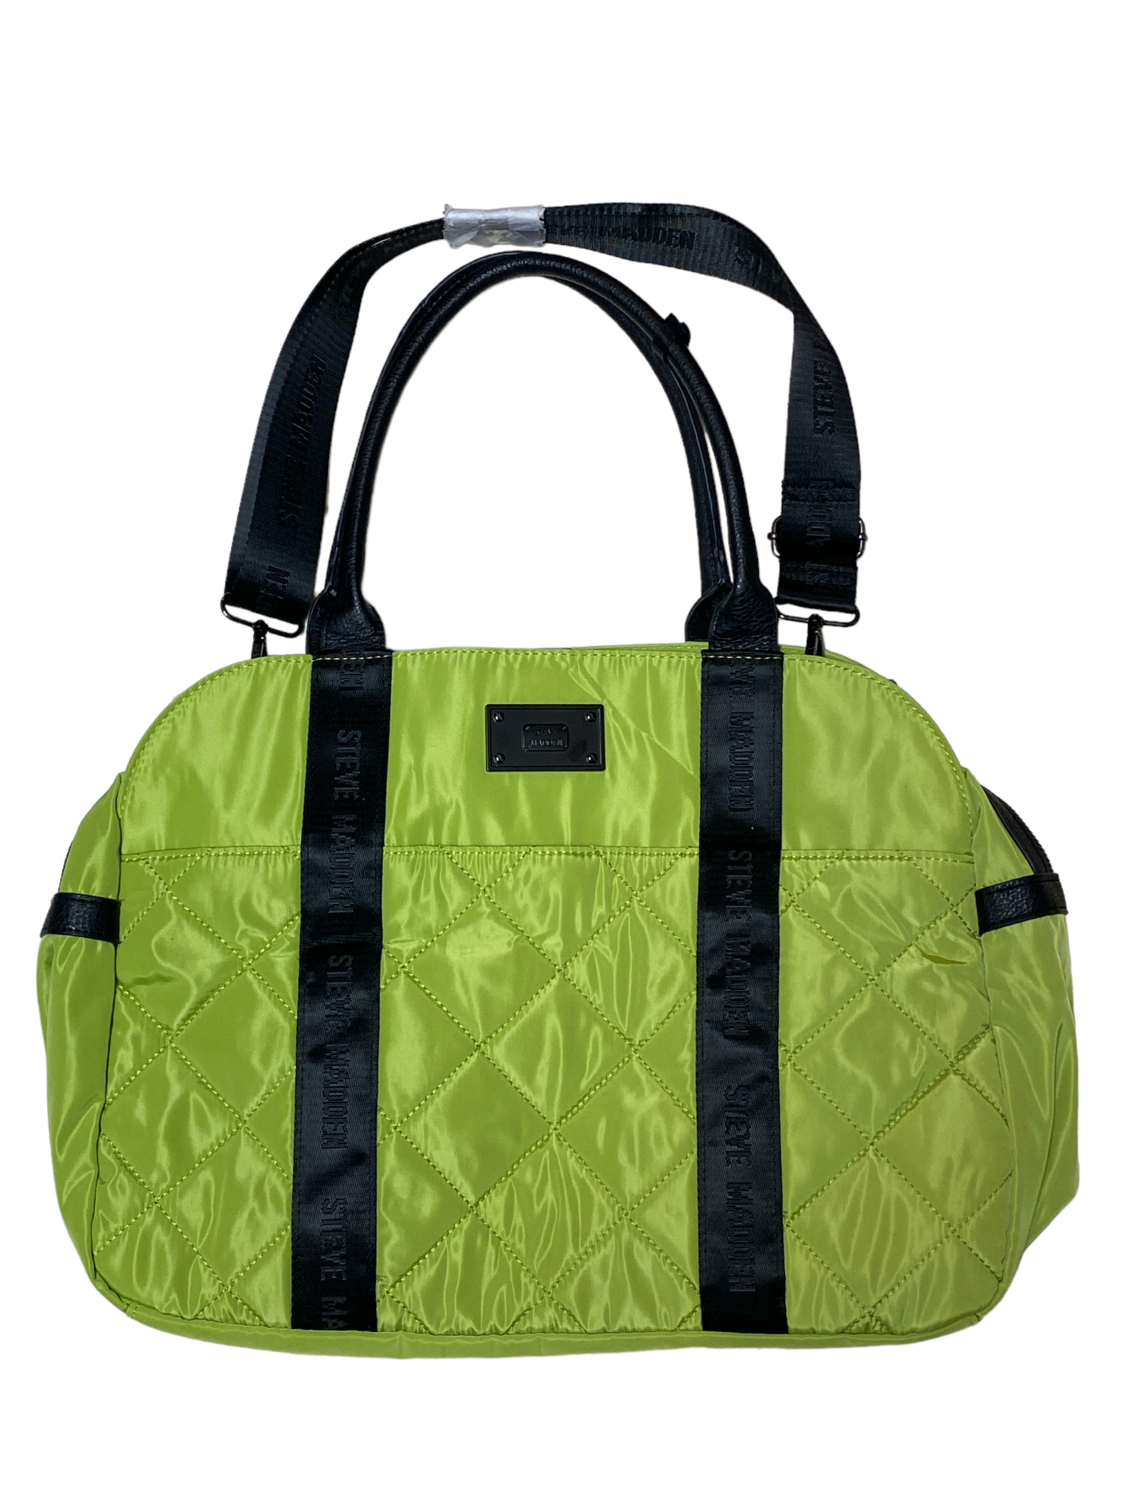 New STEVE MADDEN Green Quilted Baustin Overnight Bag $119